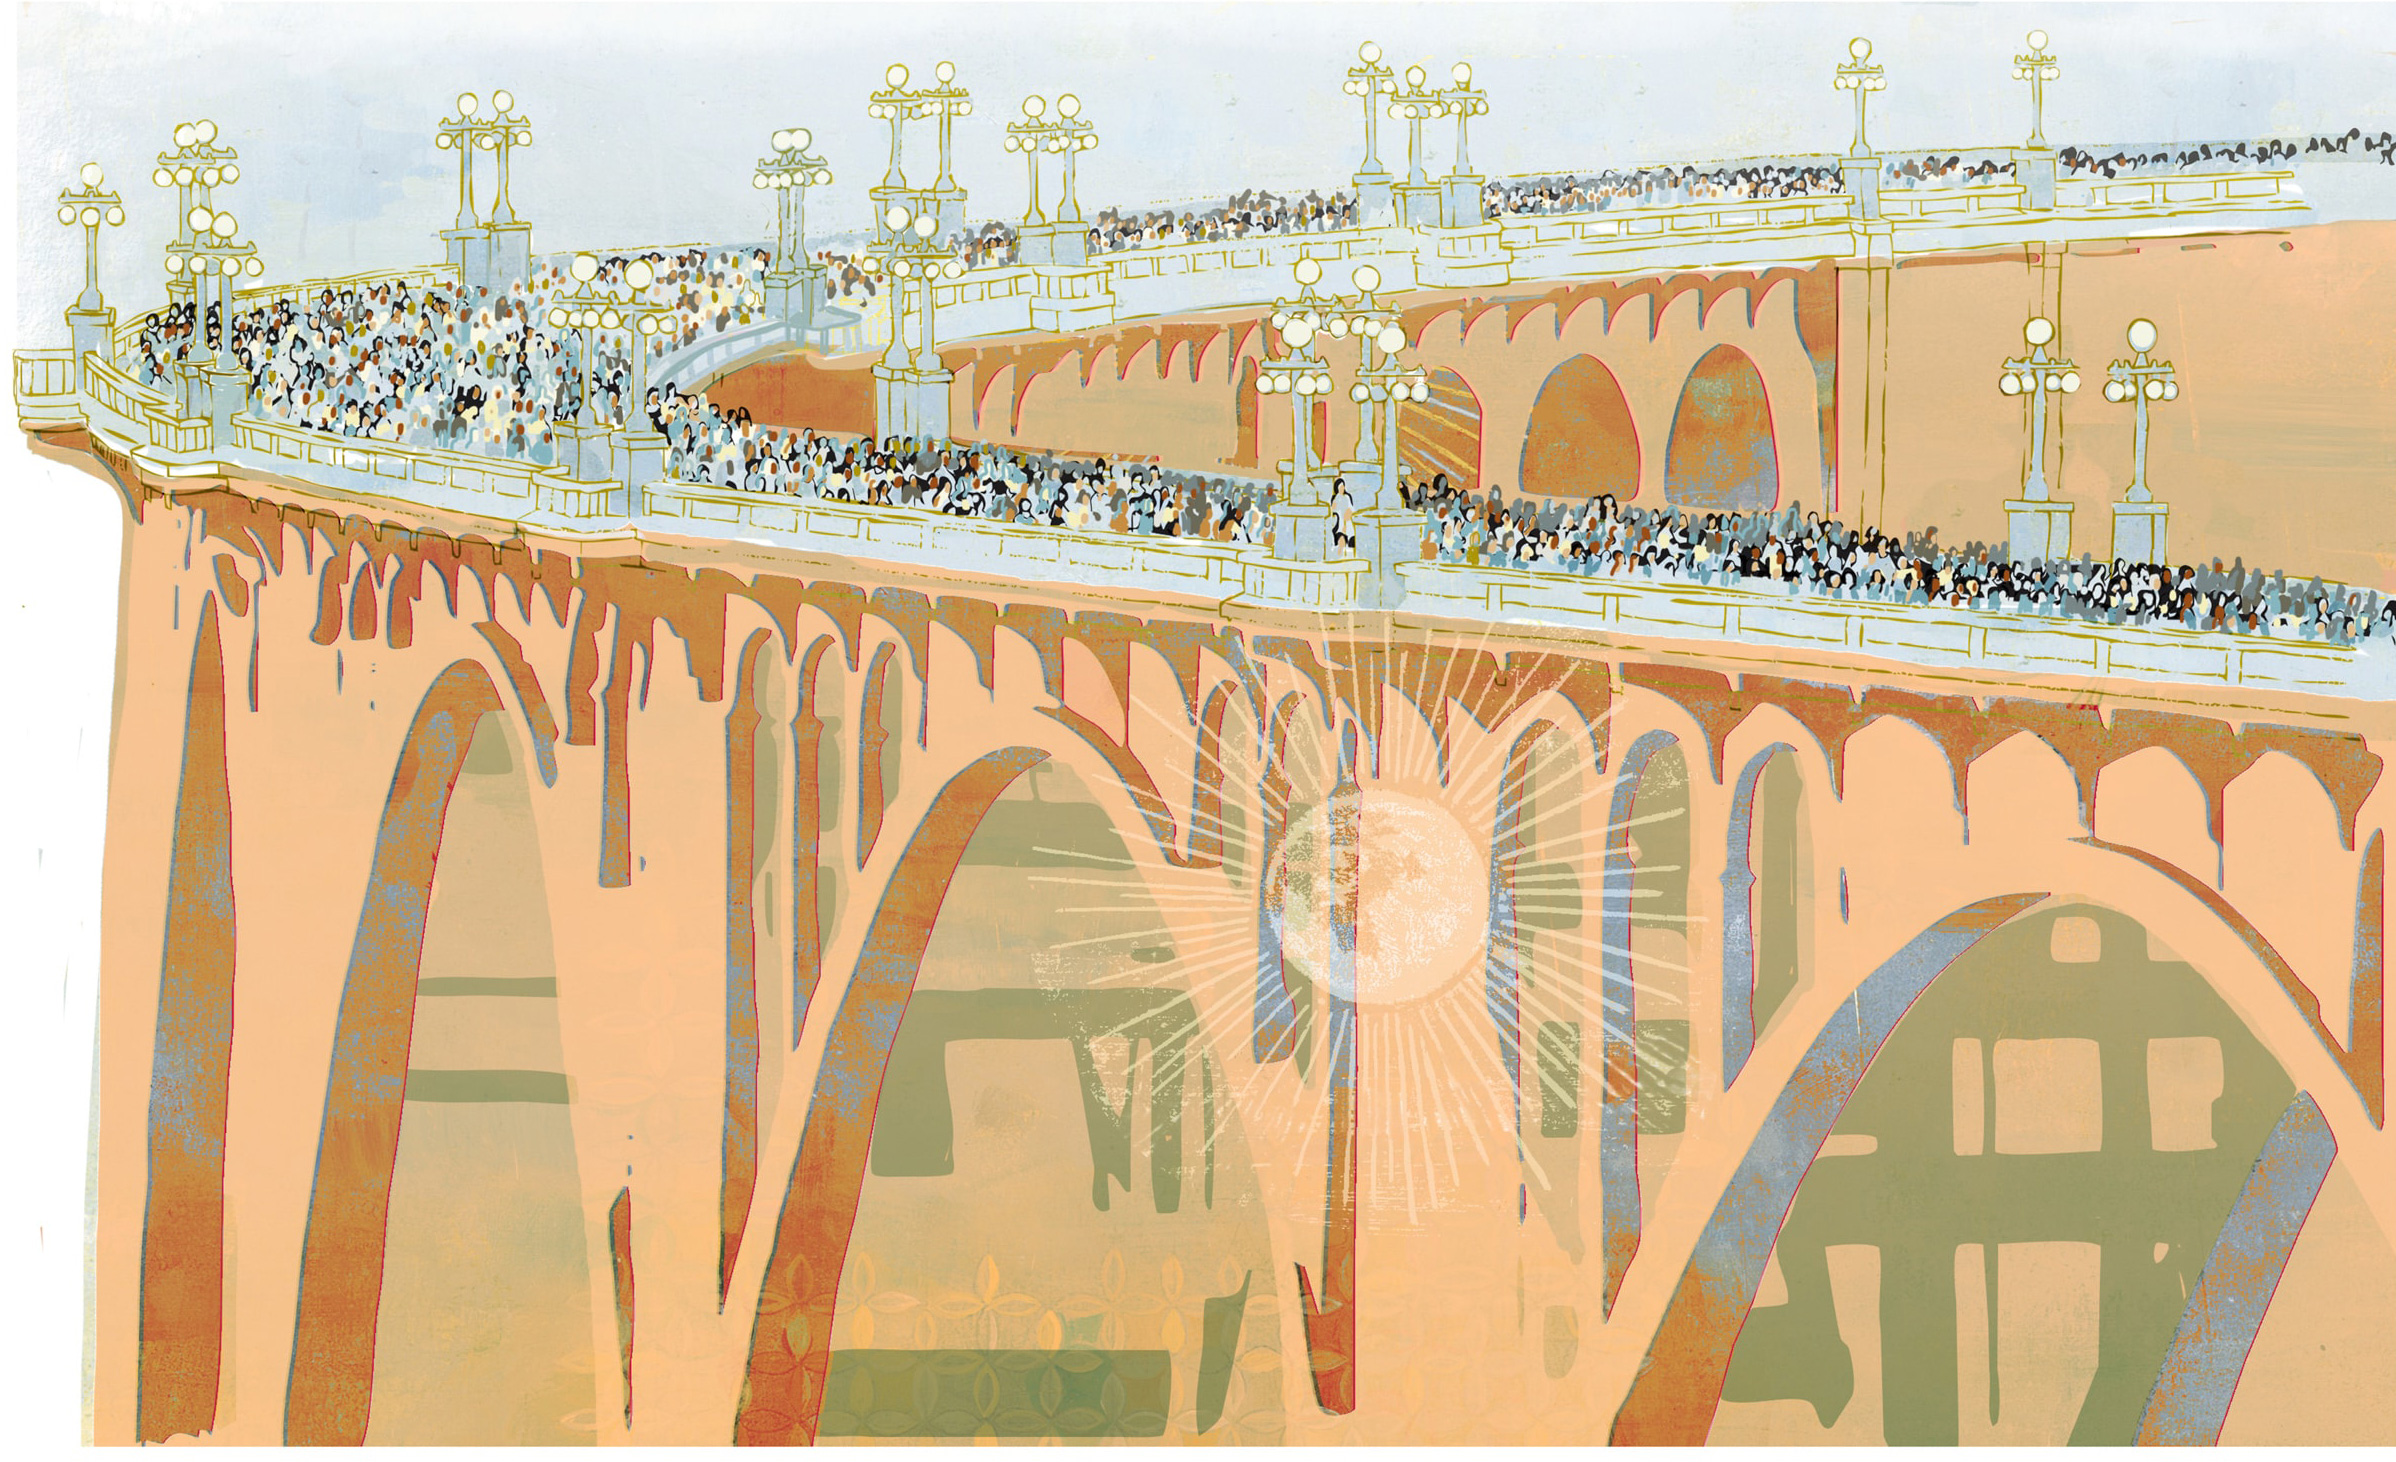 Illustration by Denise Louise Klitsie of the Colorado Street Bridge in Pasadena for FULLER magazine